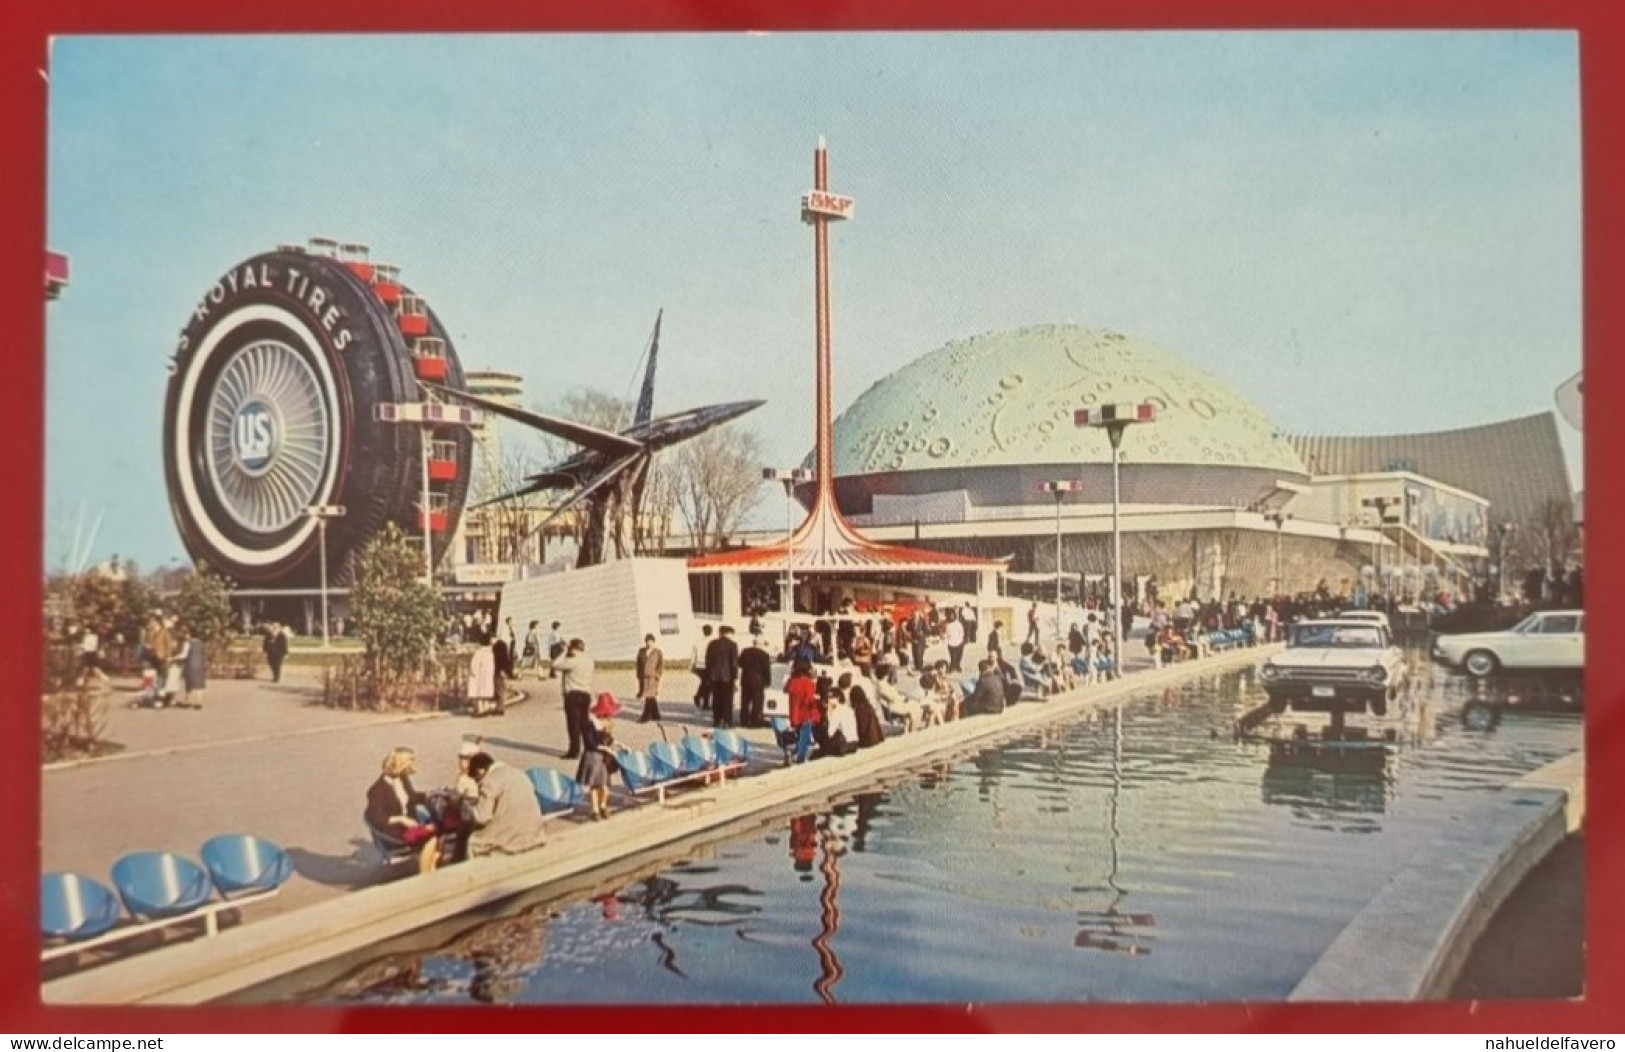 Uncirculated Postcard - USA - NY, NEW YORK WORLD'S FAIR 1964-65 - TRANSPORTATION AREA - Expositions